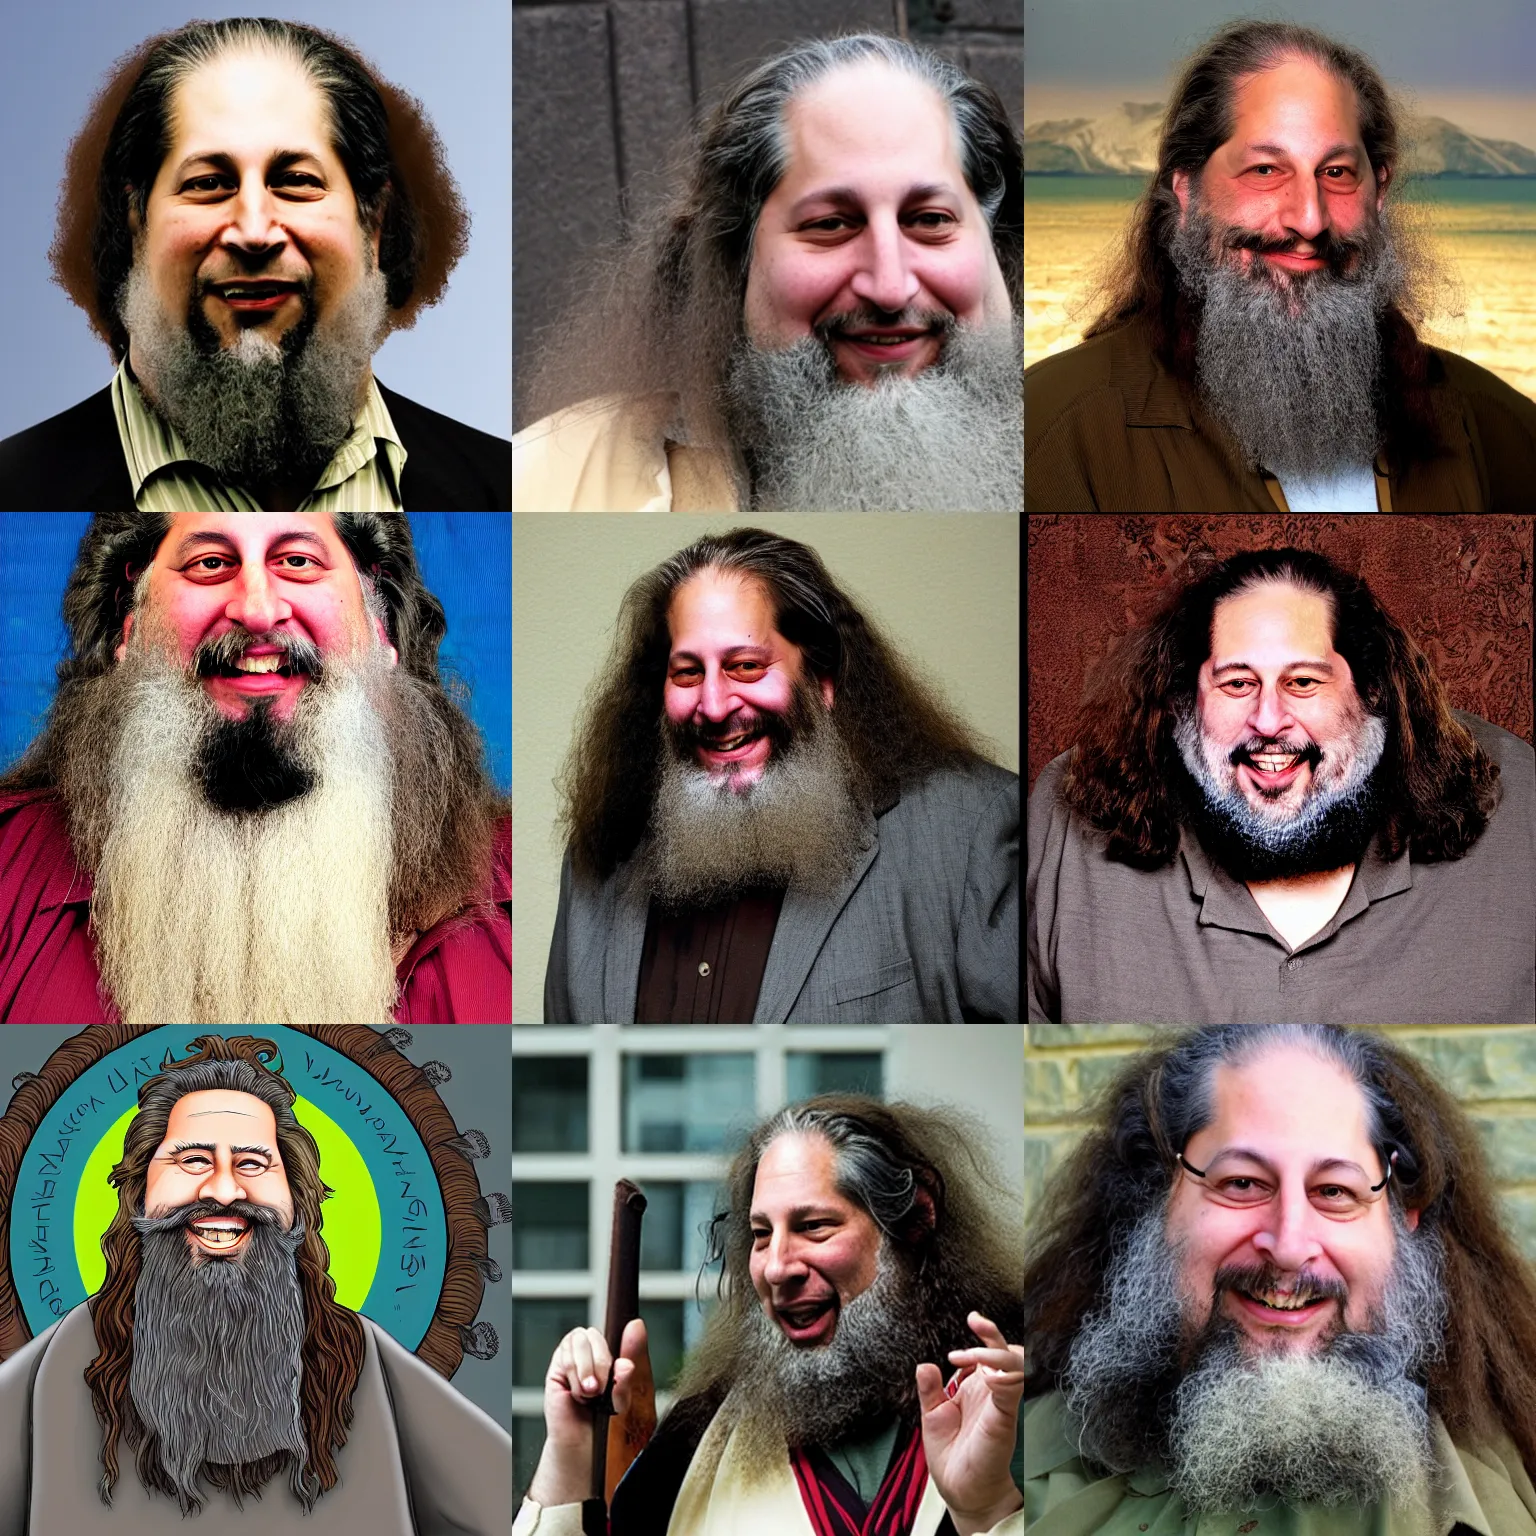 Prompt: Richard Stallman as a half-man half-gnu beast